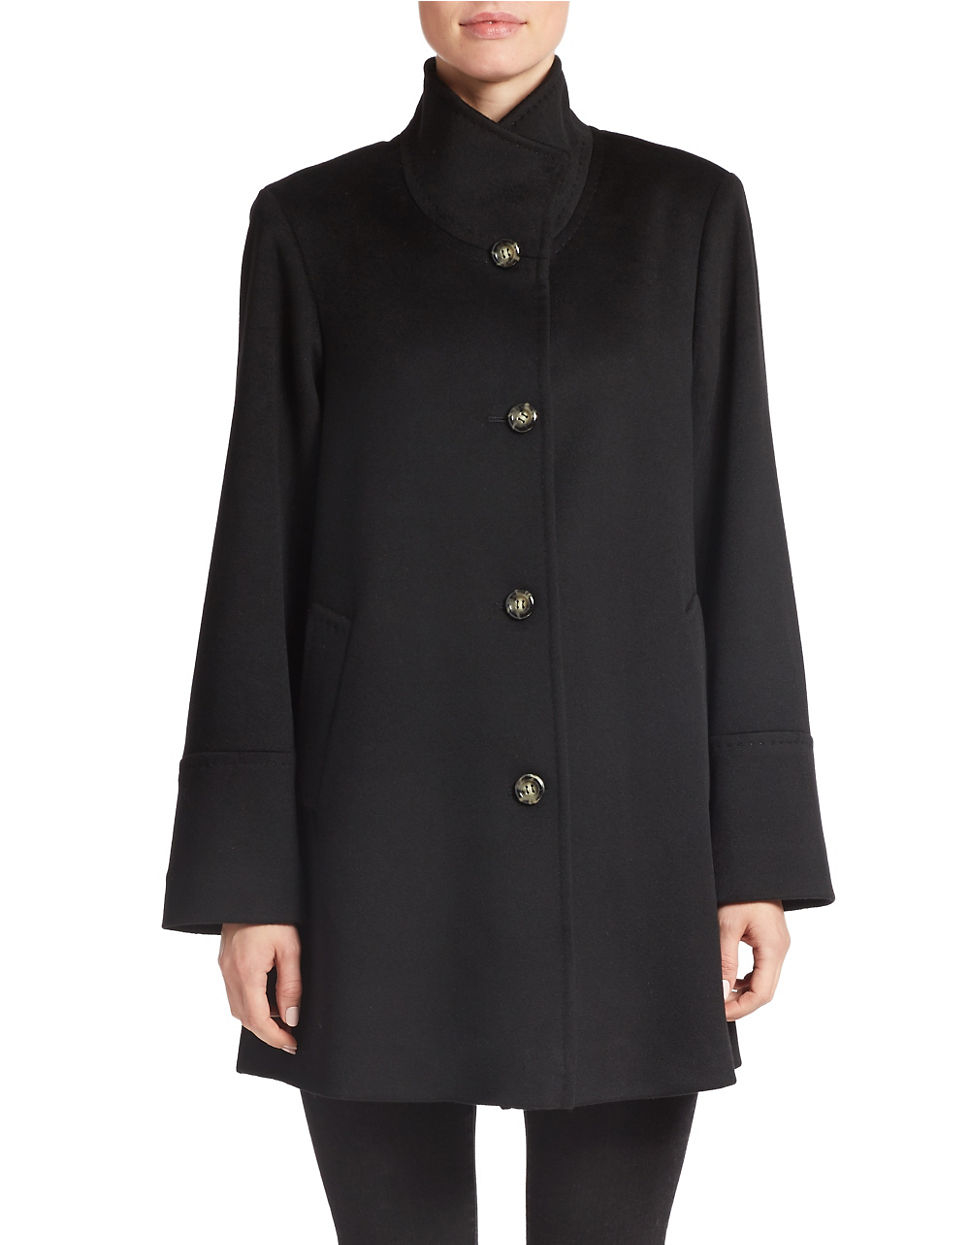 Fleurette Stand Collar Coat in Black | Lyst